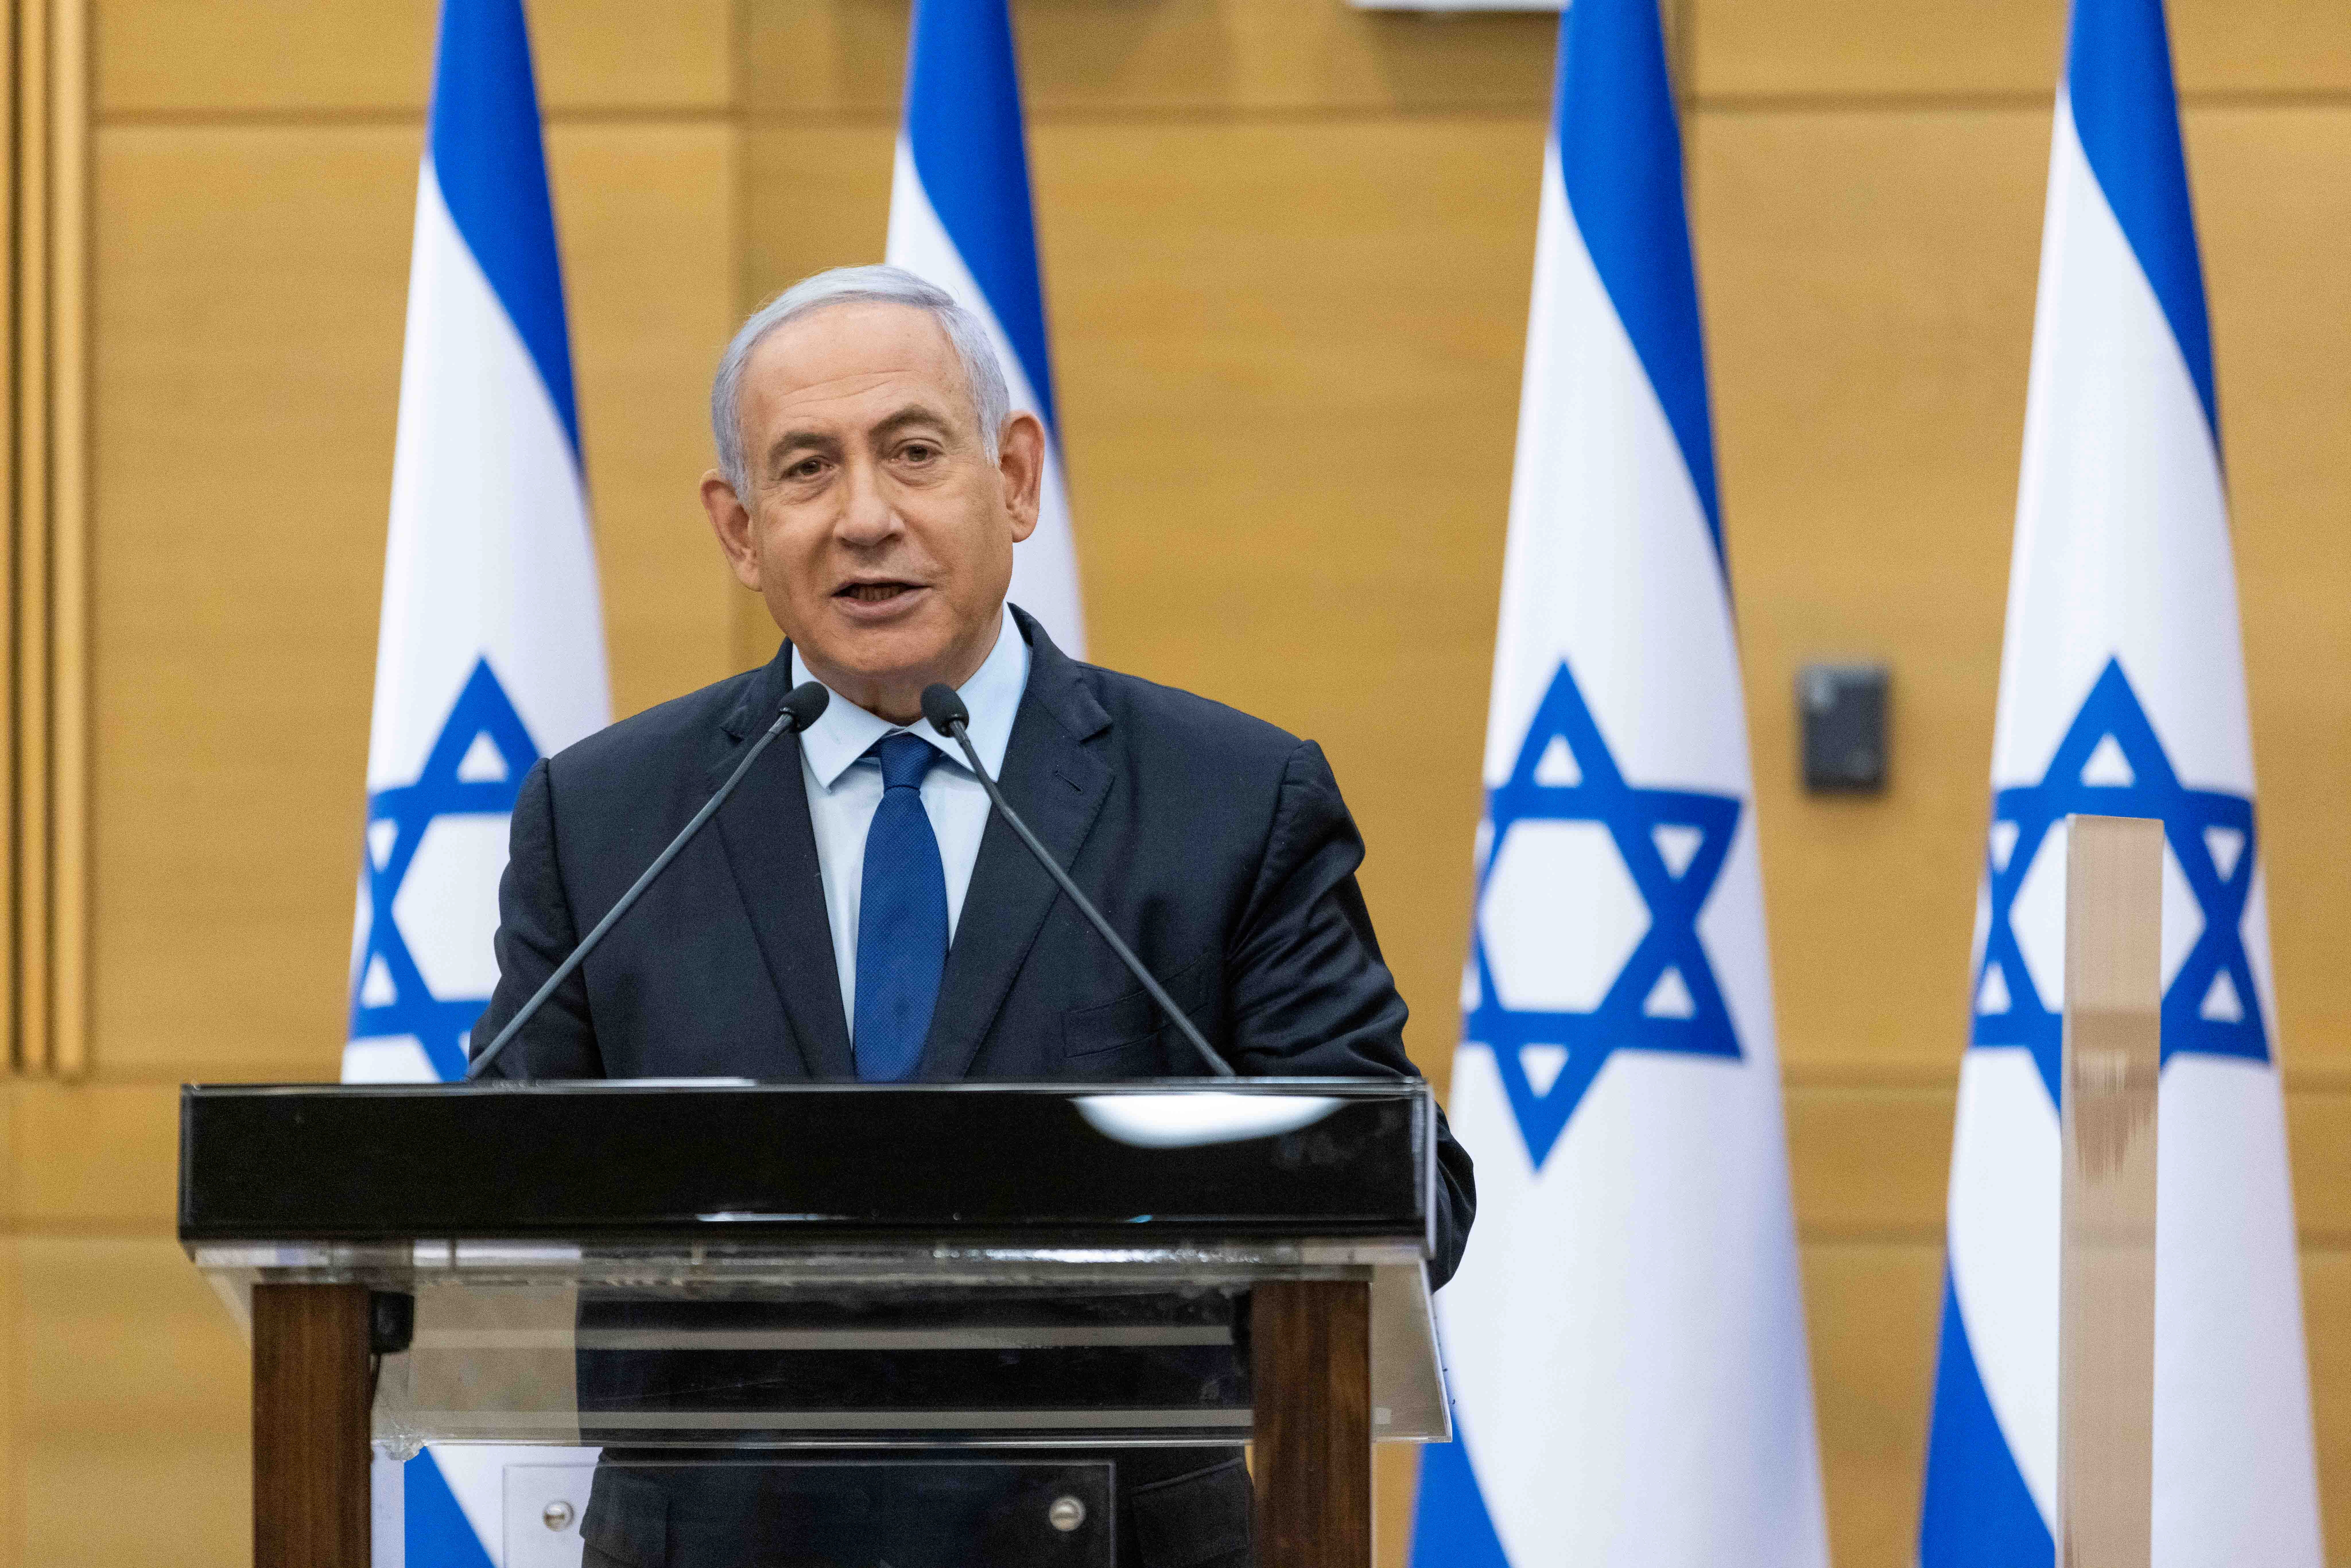 Israeli Prime Minister Benjamin Netanyahu political statement